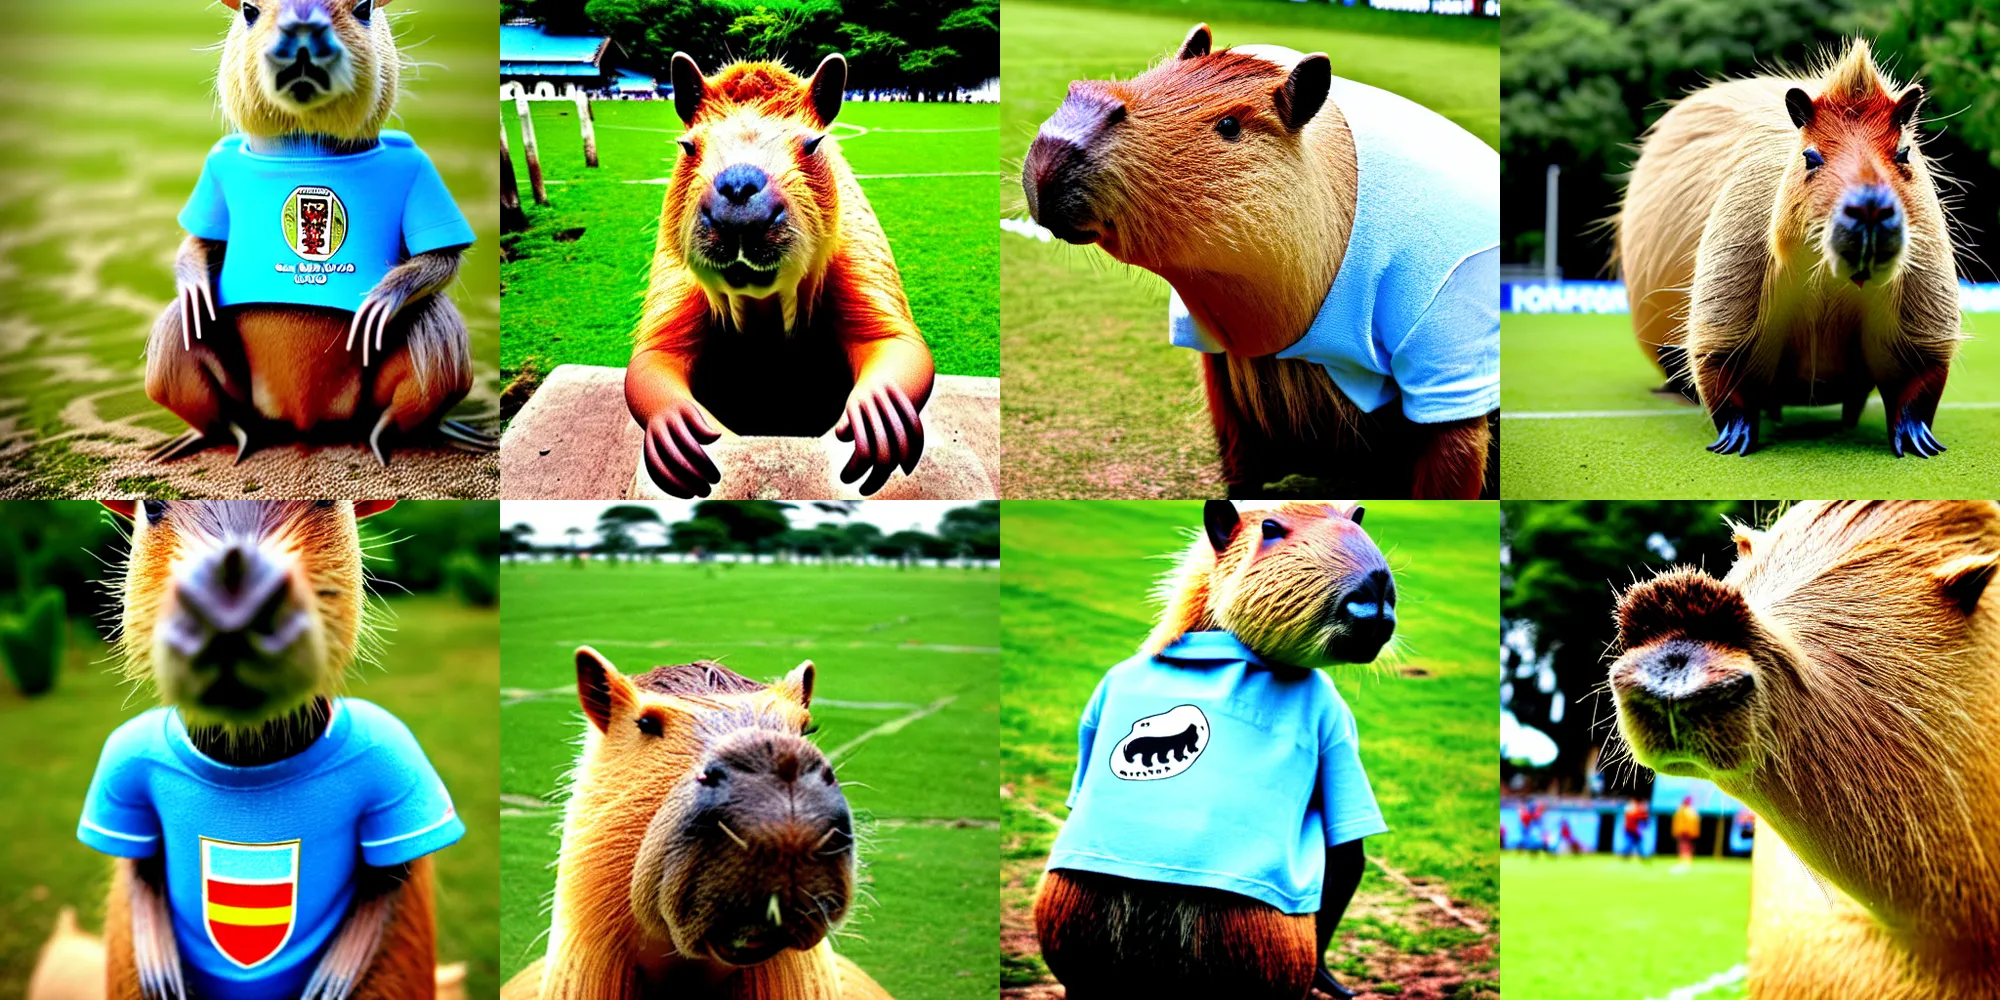 Prompt: Capybara sipping MATE wearing uruguay FC shirt